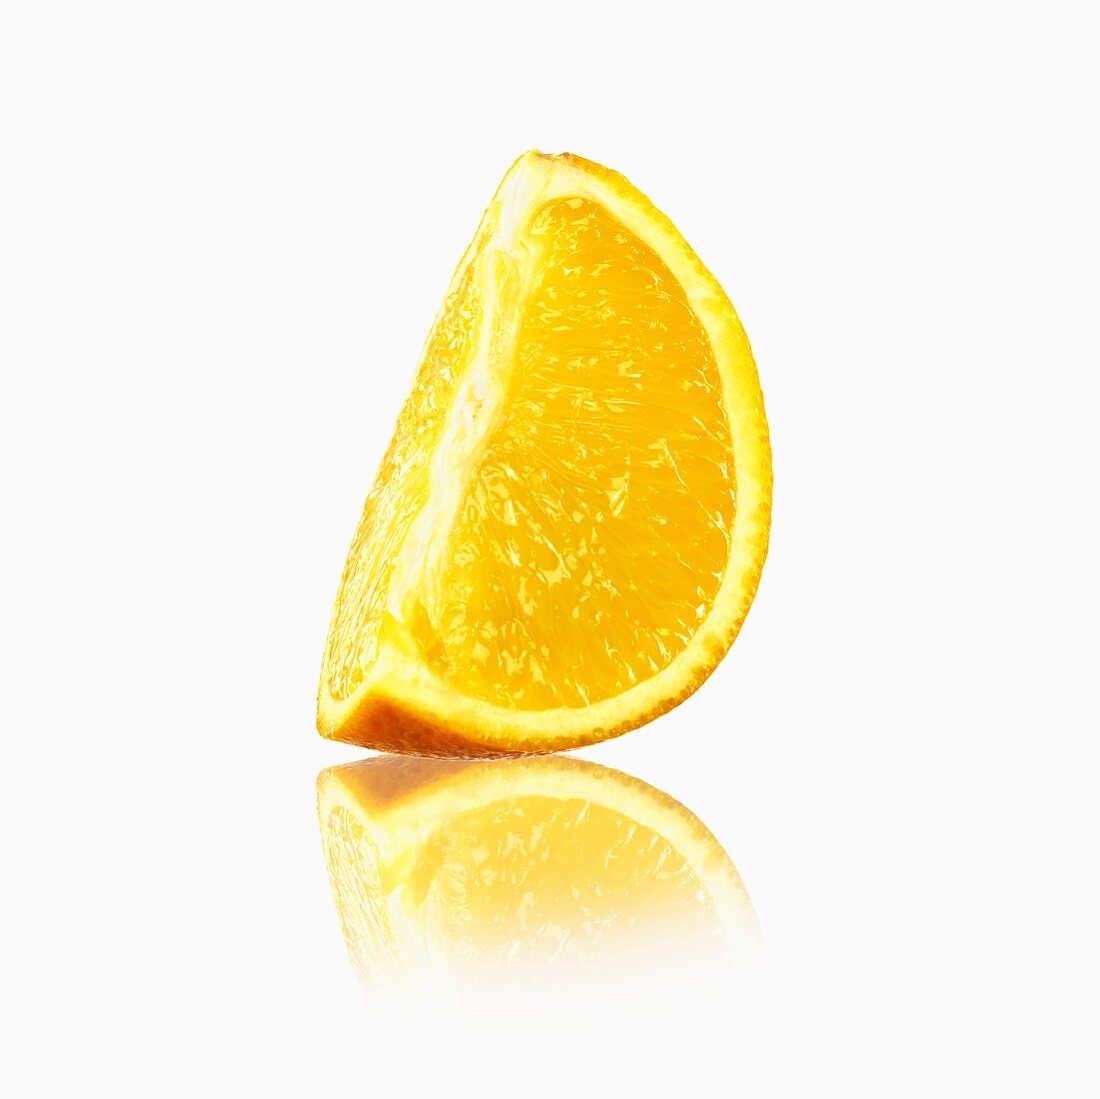 A wedge of orange